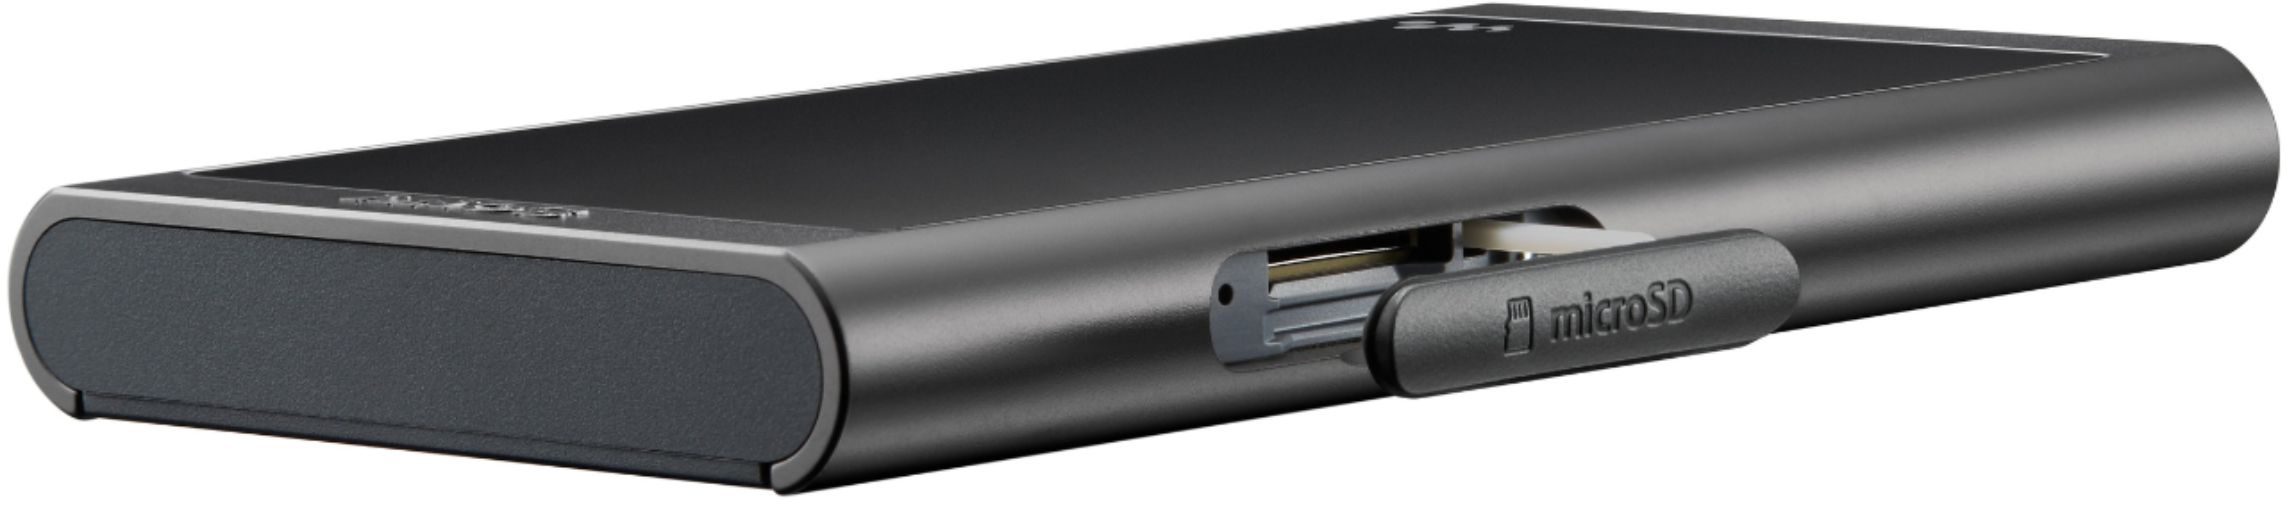 Customer Reviews: Sony Walkman NW-A55 Hi-Res 16GB* MP3 Player Black